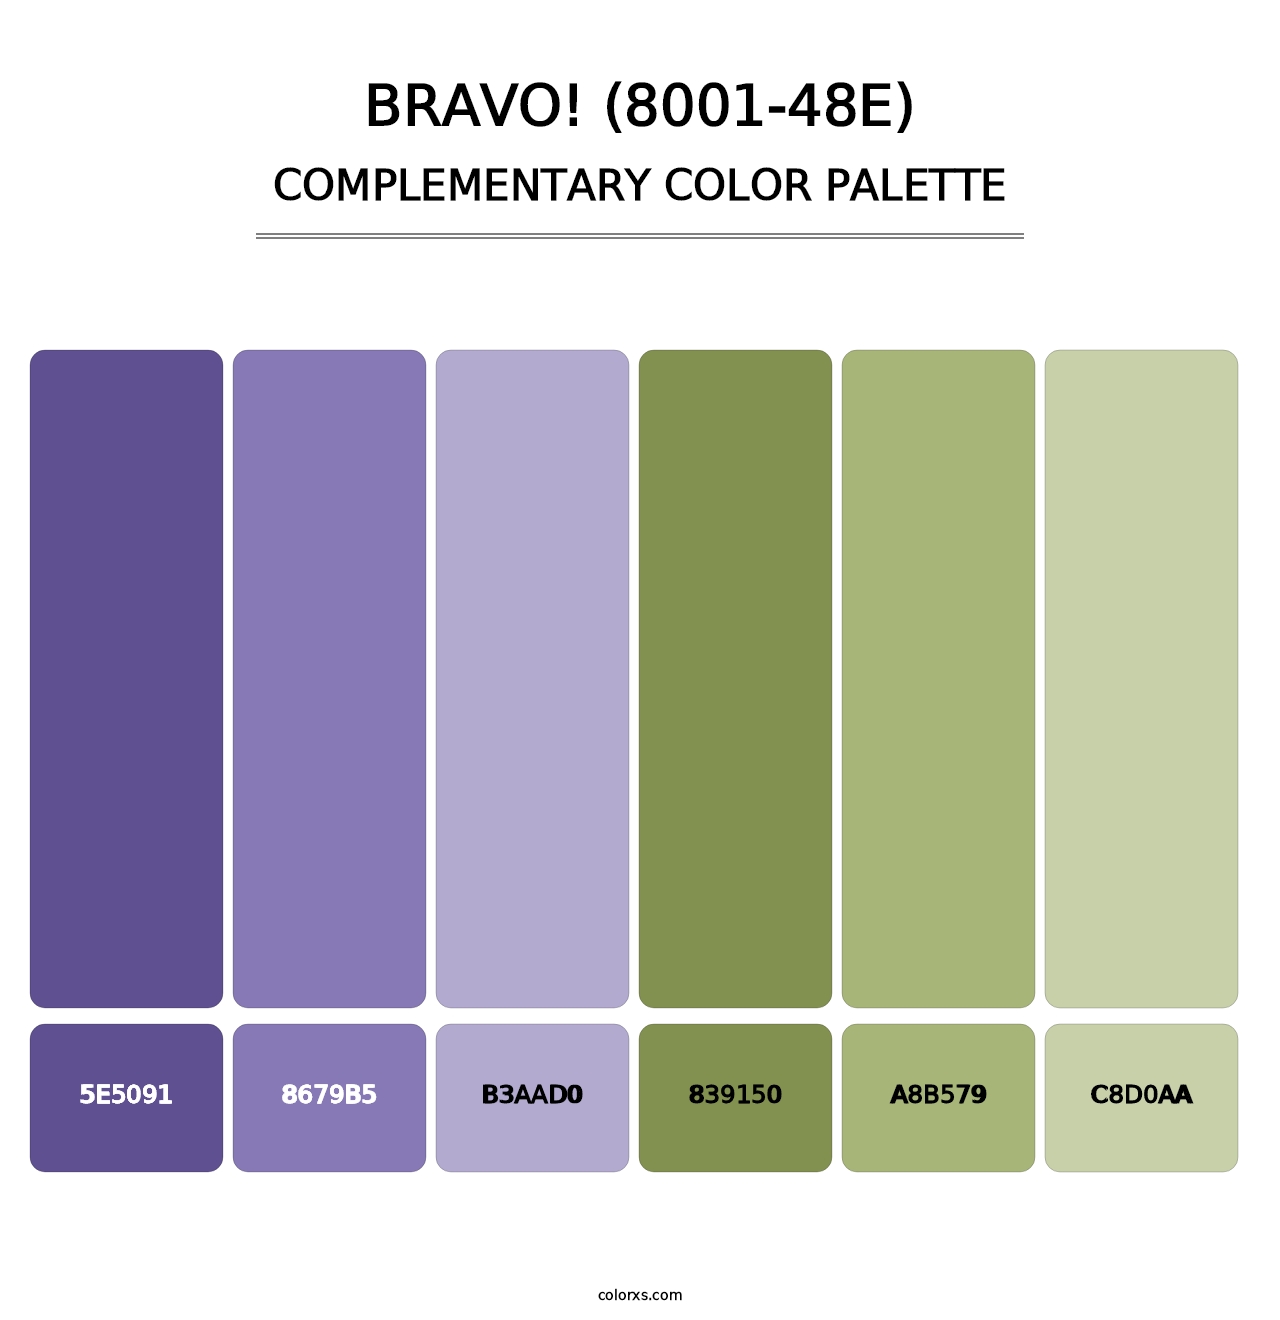 Bravo! (8001-48E) - Complementary Color Palette